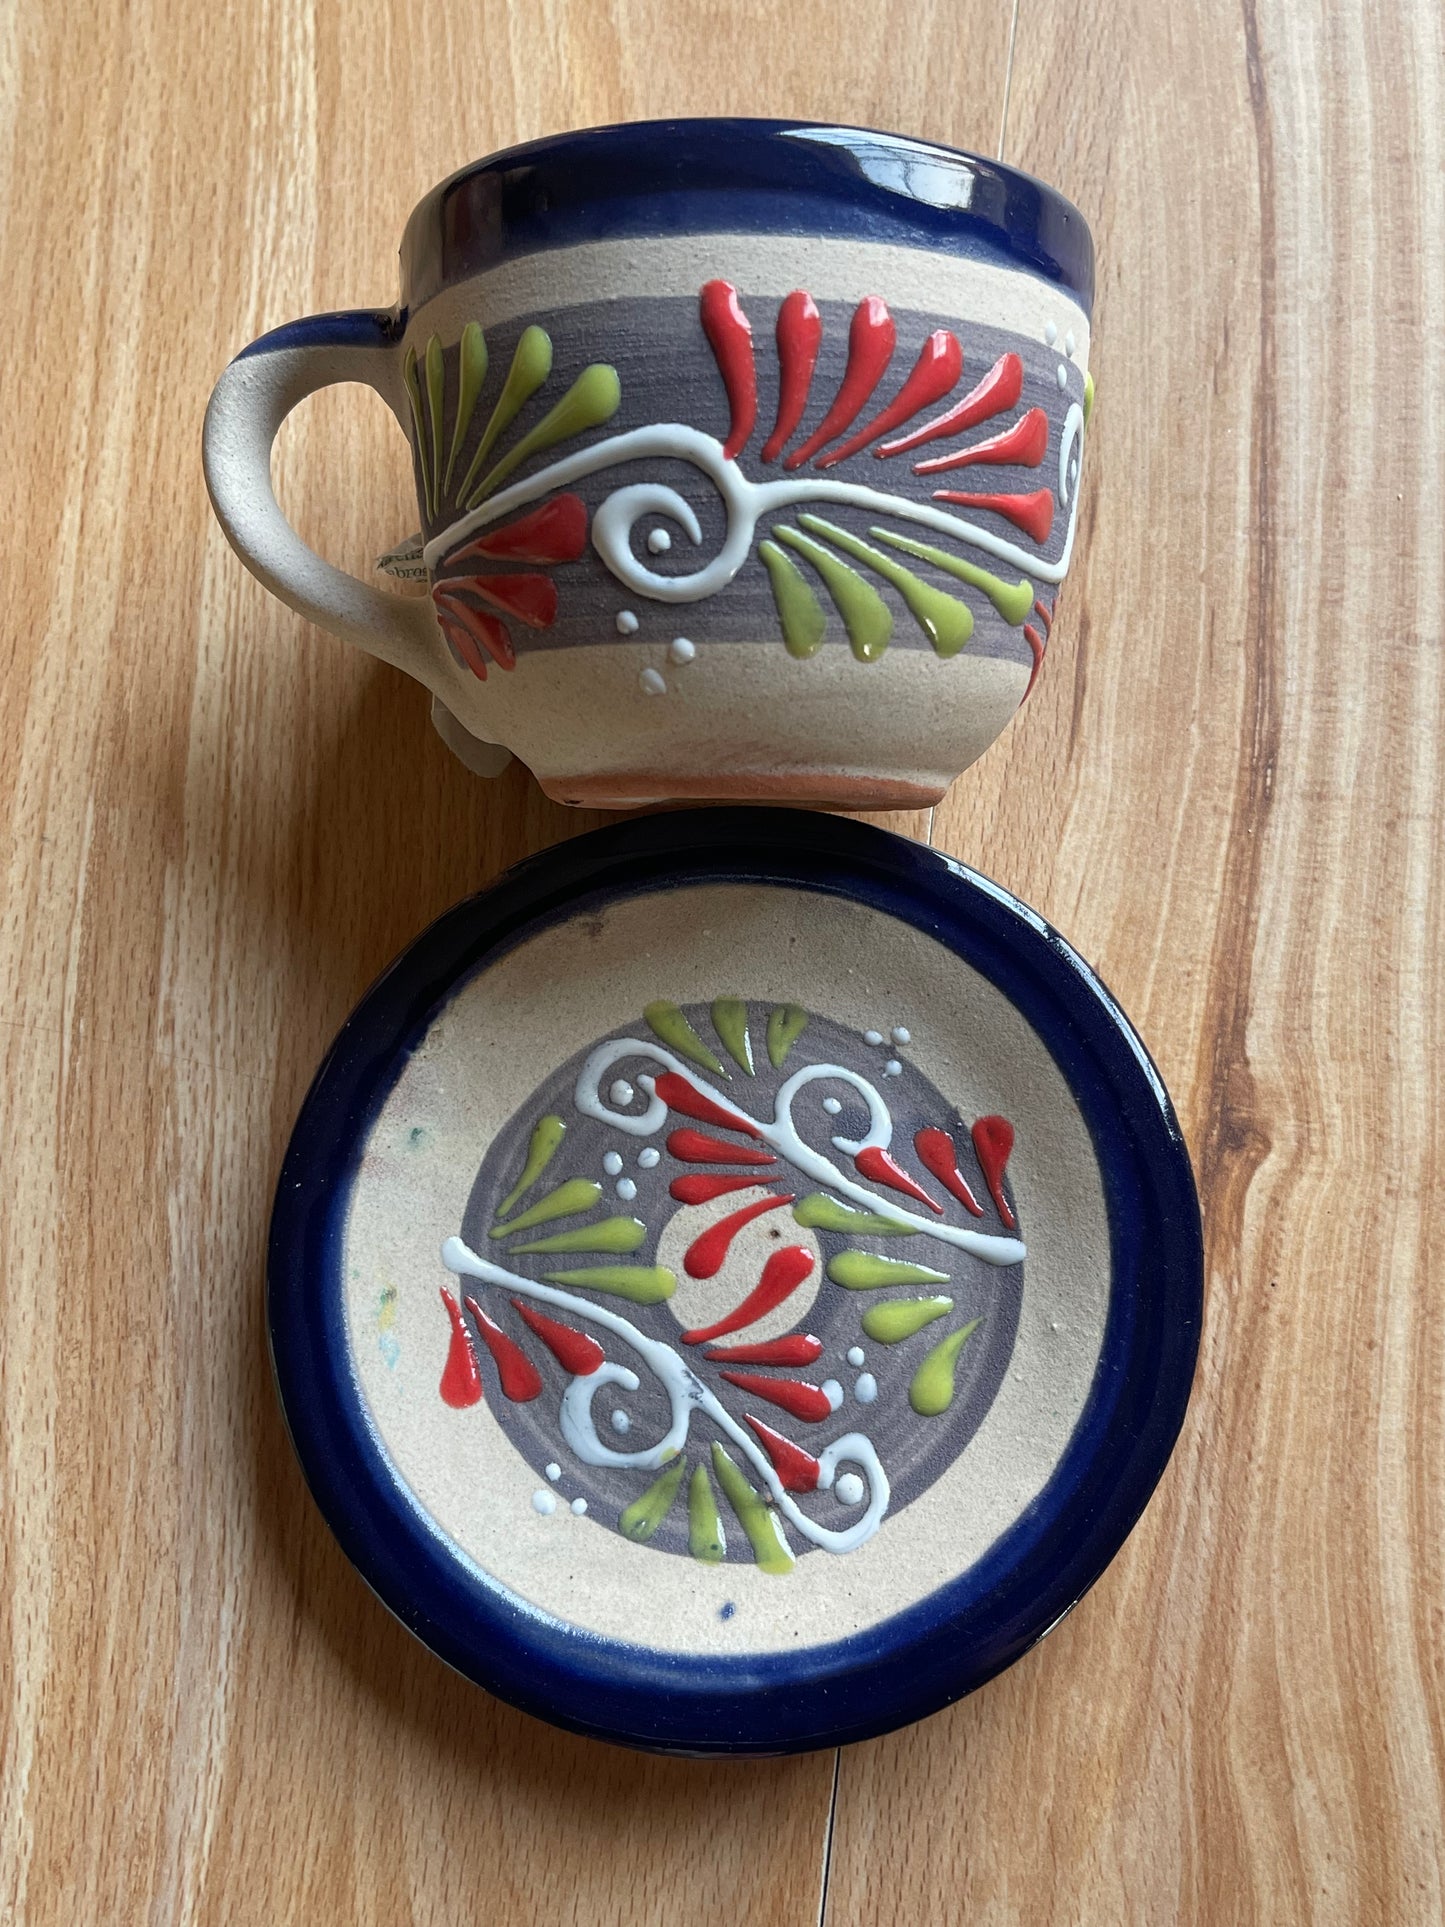 Michoacan pottery mug and plate gift set/barro mexicano taza y plato/artesania mexicana/juego de te/coffee gift set